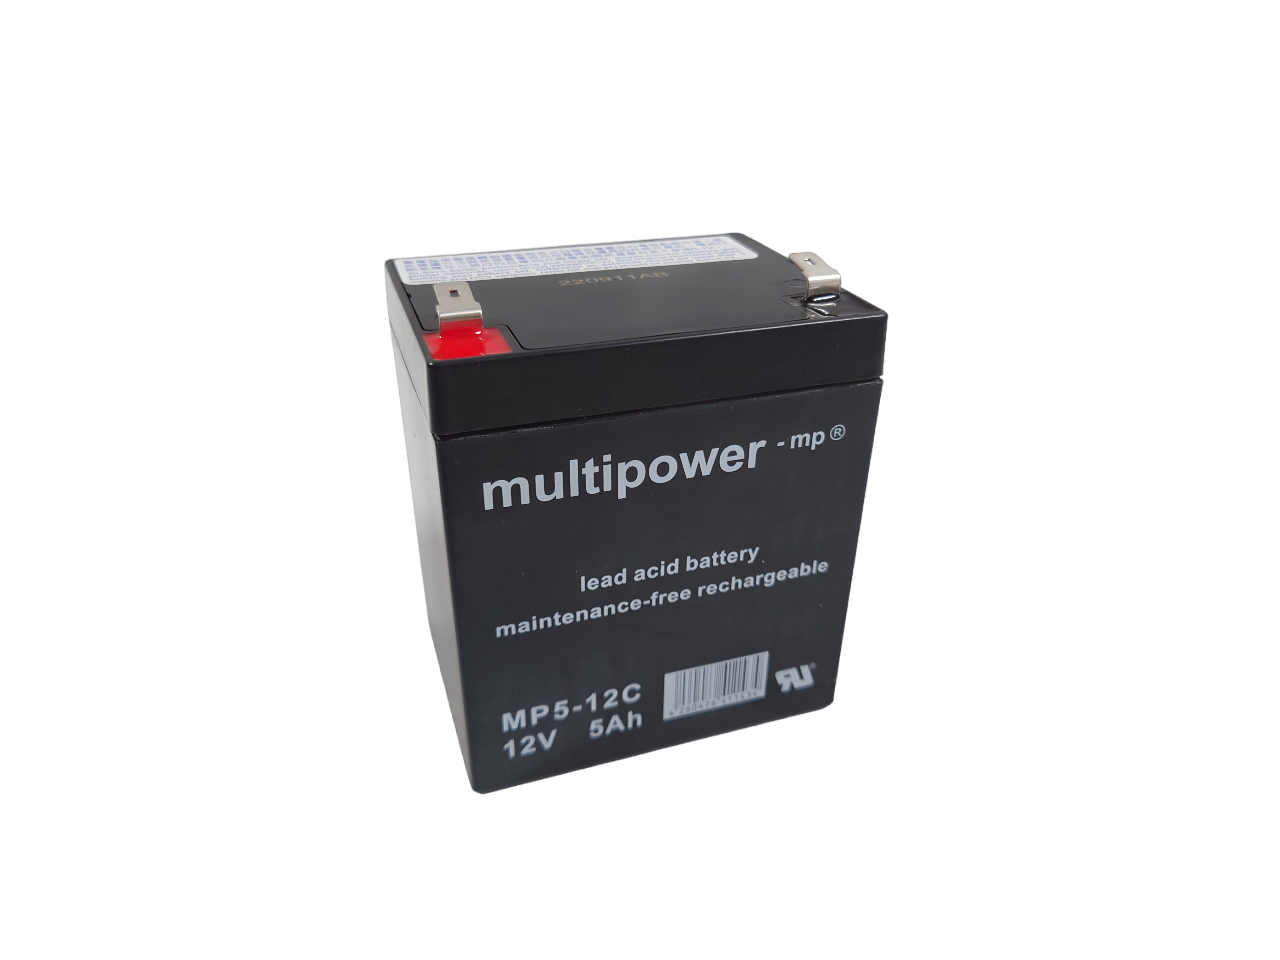 Multipower MP 5-12C VdS